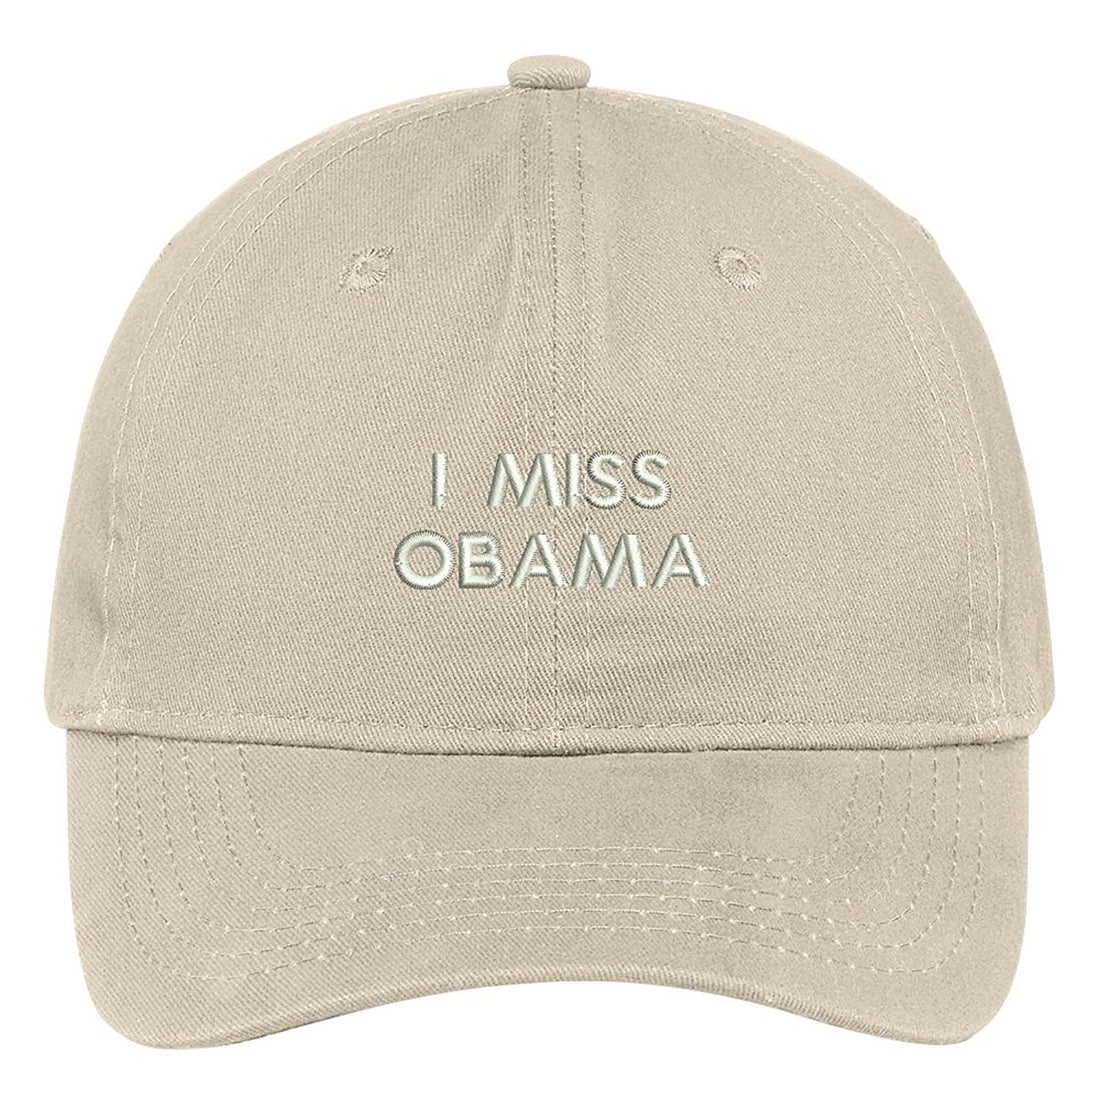 Trendy Apparel Shop I Miss Obama Embroidered Brushed Cotton Dad Hat Cap